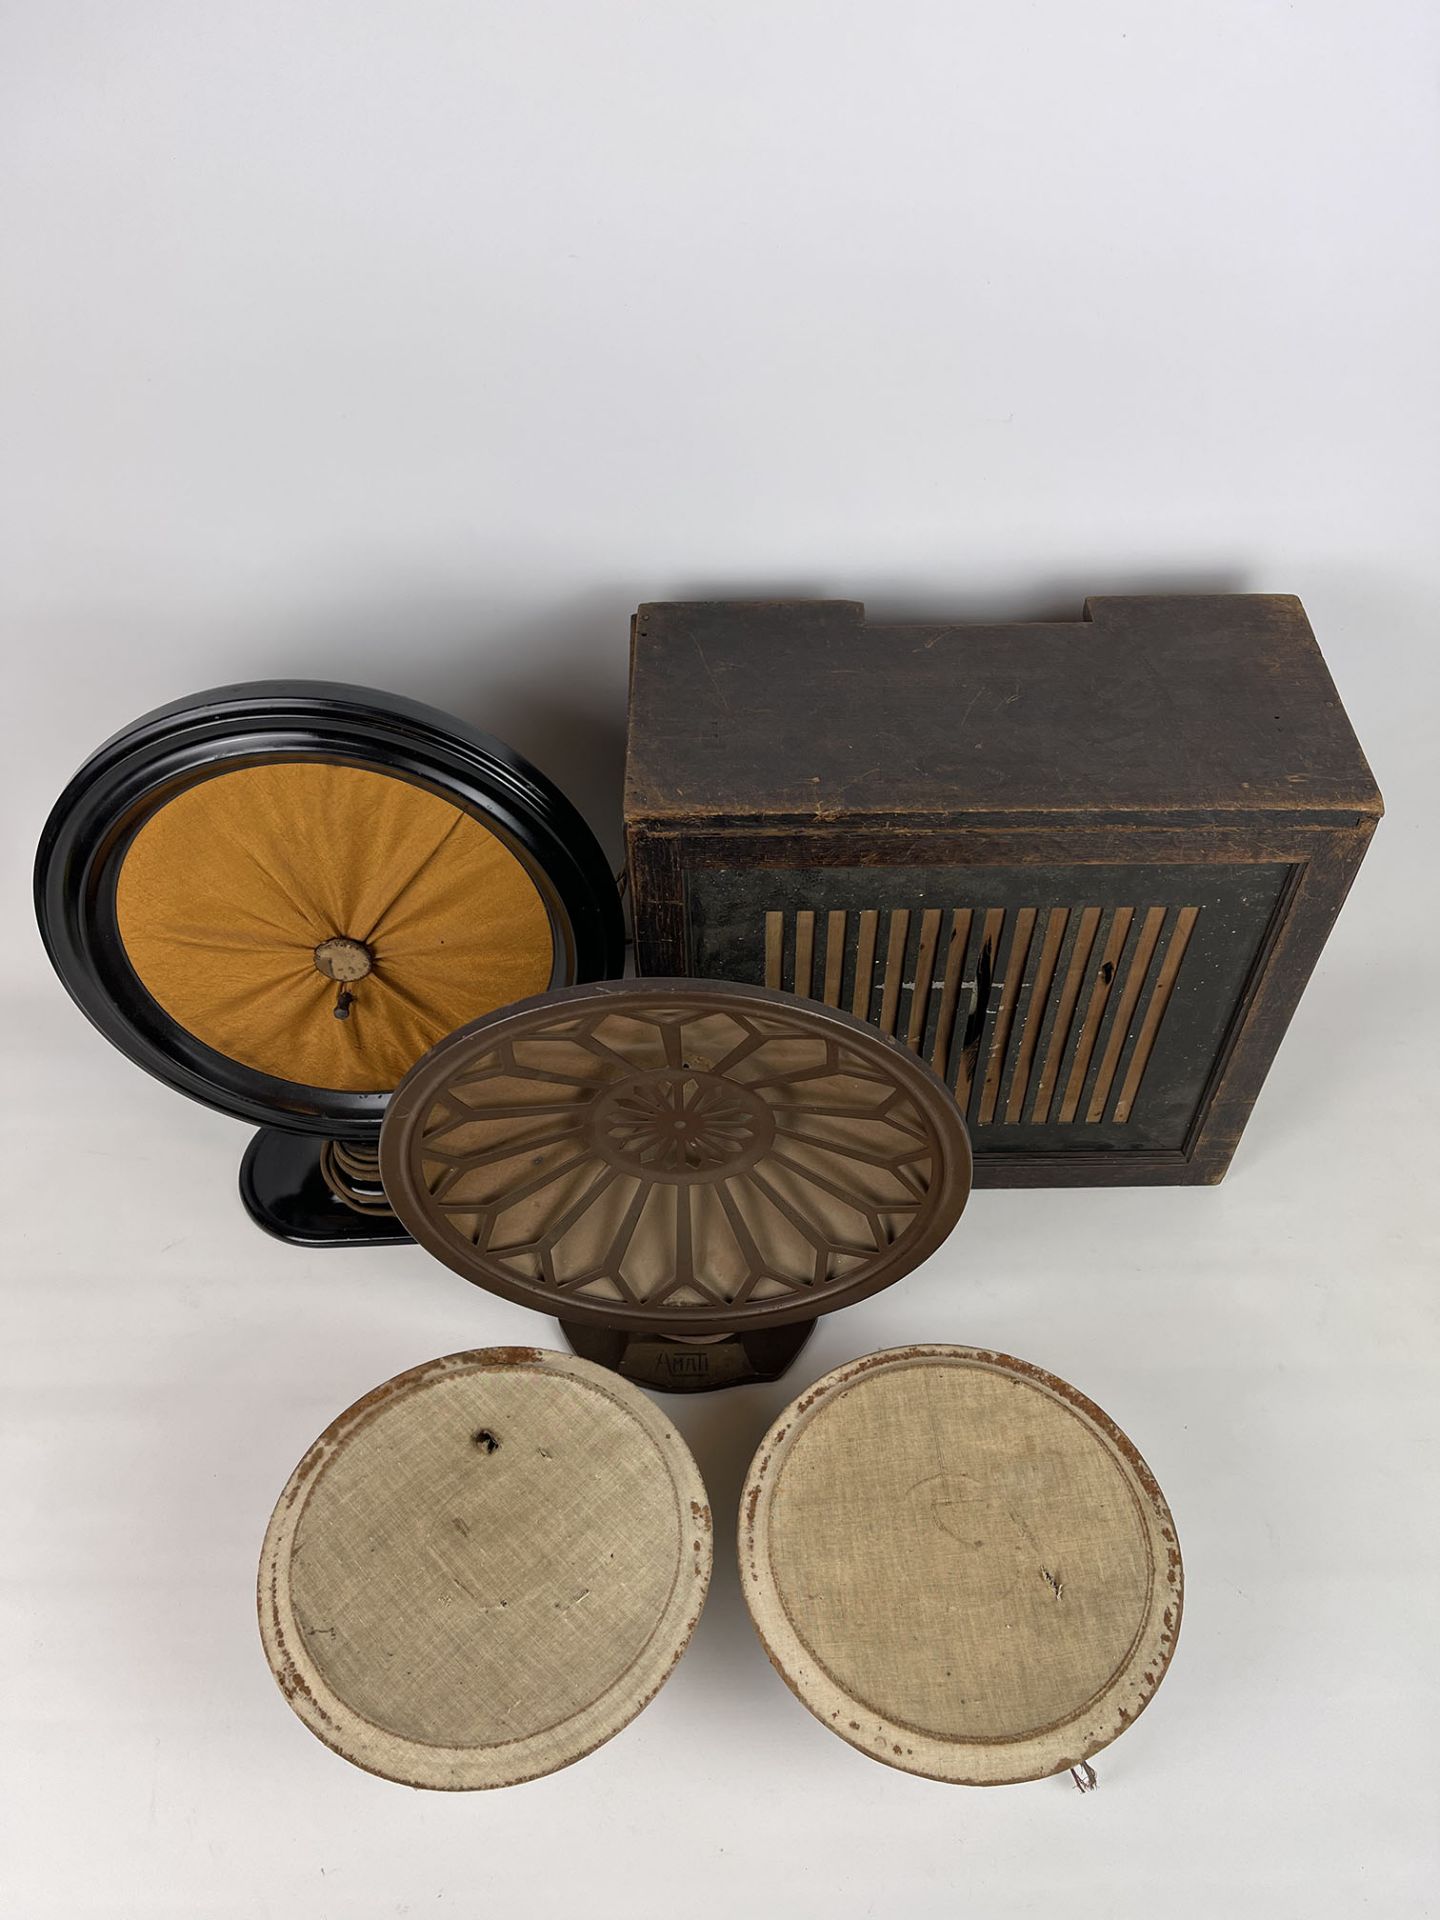 Lot of 5 Unrestored Vintage Radio Speakers - Image 2 of 9